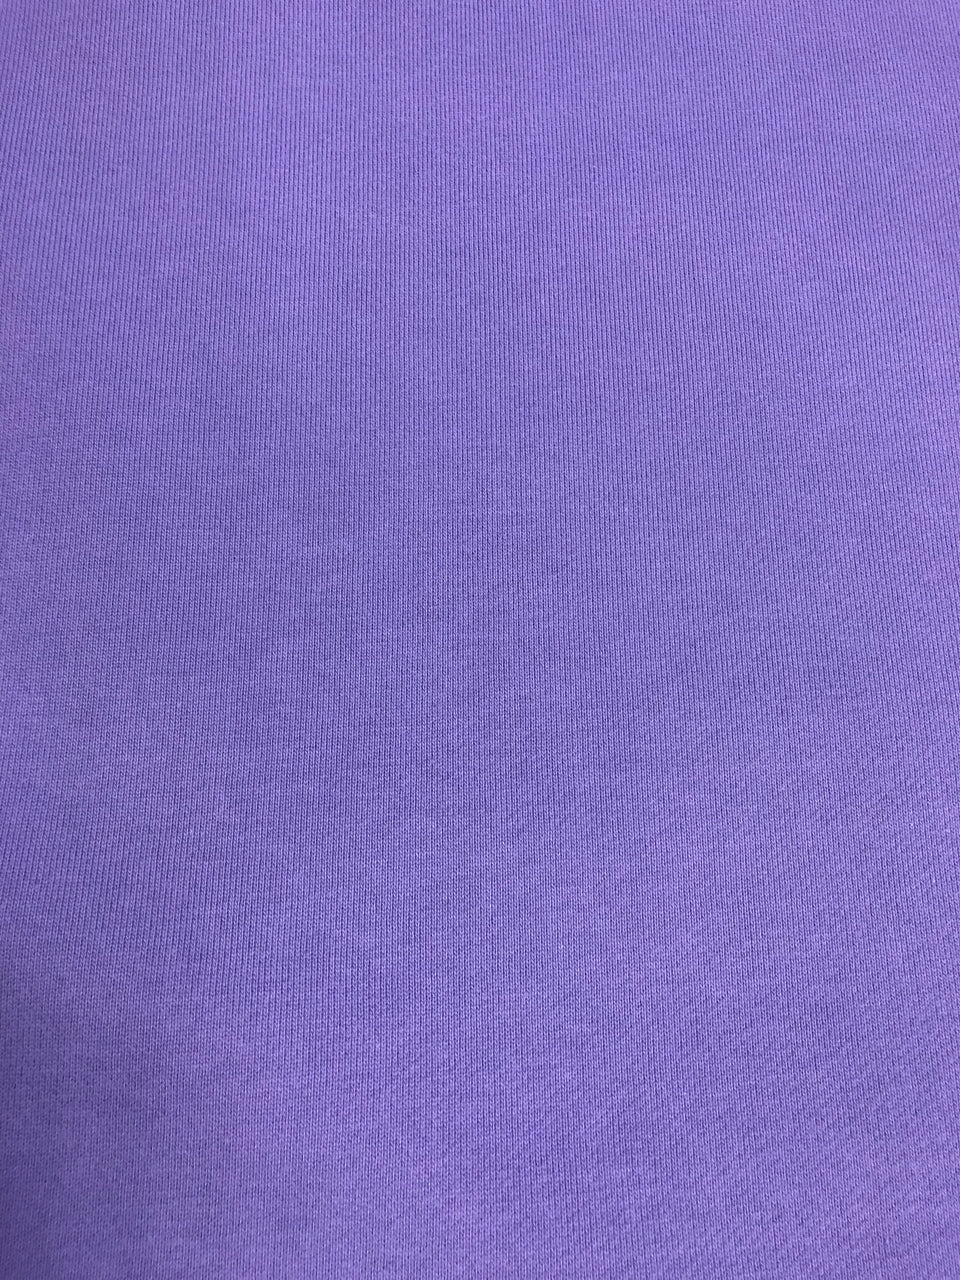 Lavender - French Fleece